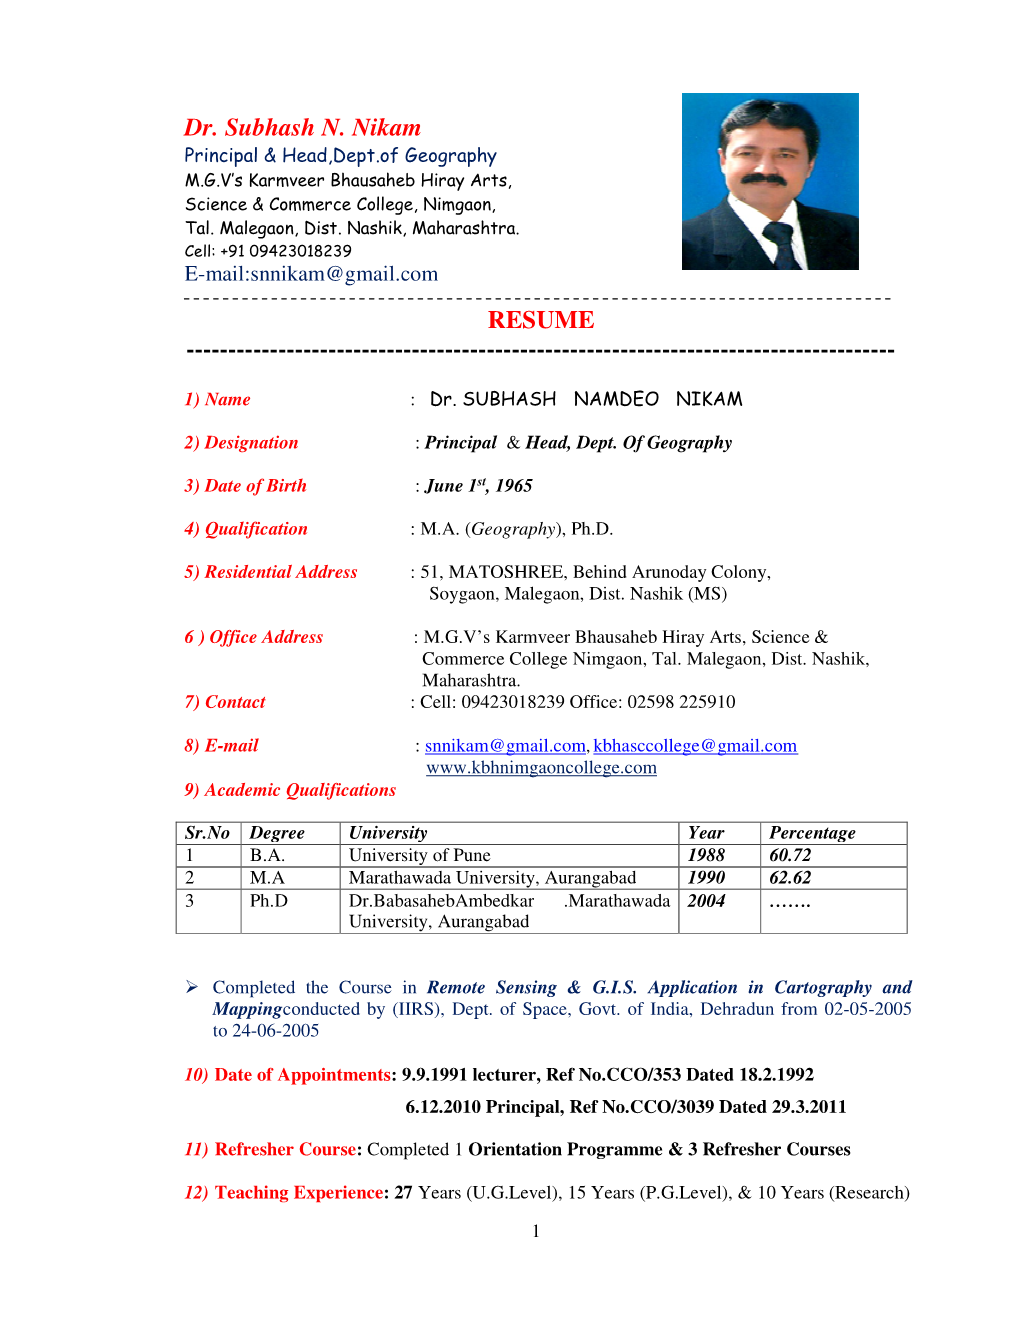 Dr. Subhash N. Nikam Principal & Head,Dept.Of Geography M.G.V’S Karmveer Bhausaheb Hiray Arts, Science & Commerce College, Nimgaon, Tal